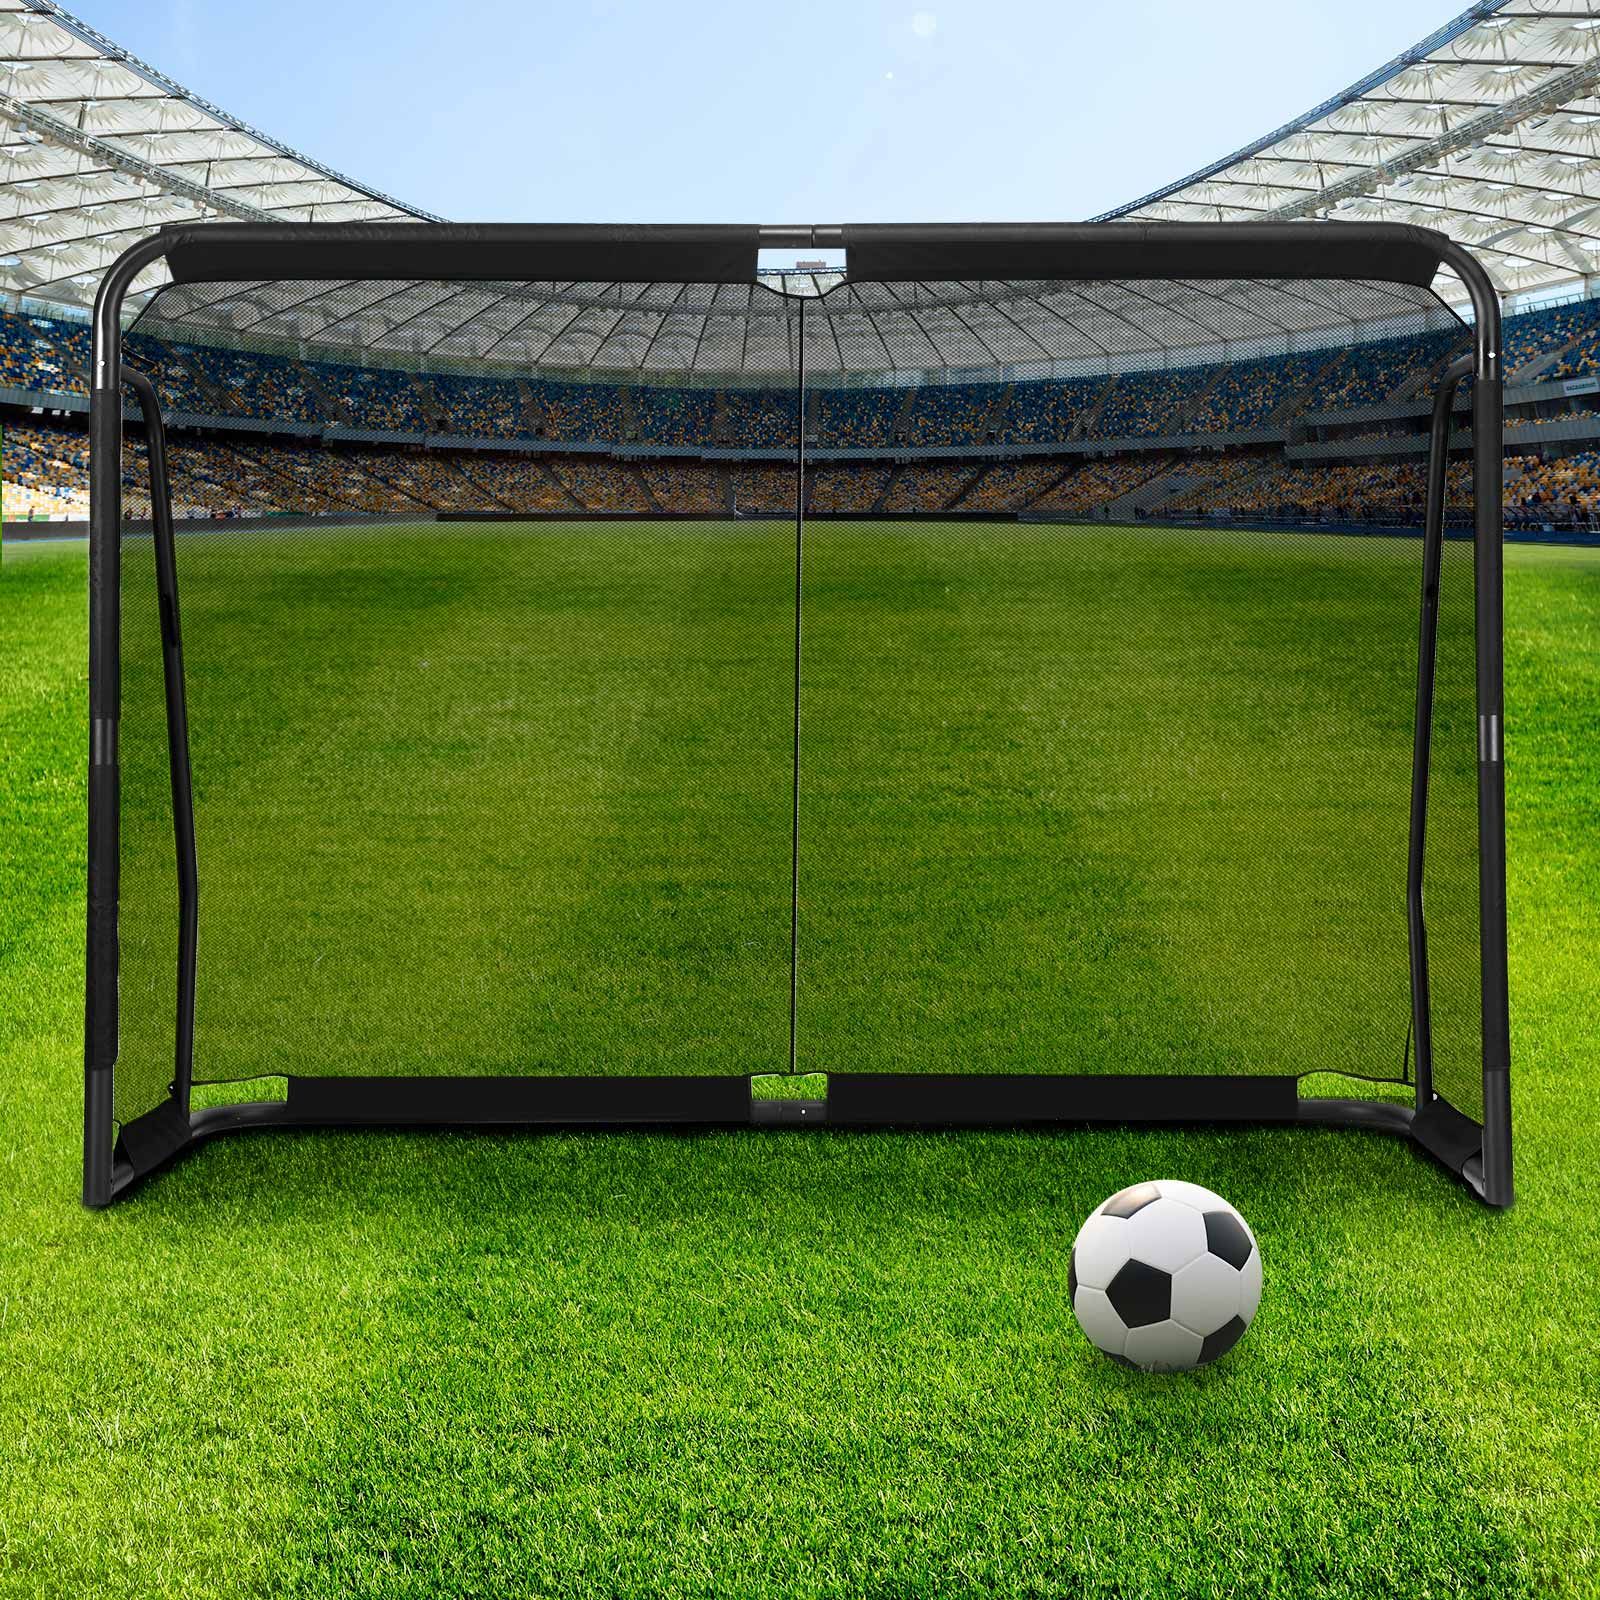 Soccer Goal Football Net Set Metal Frame Backyard Game Training Practice Sports Match Equipment Kids Adults 3x2m